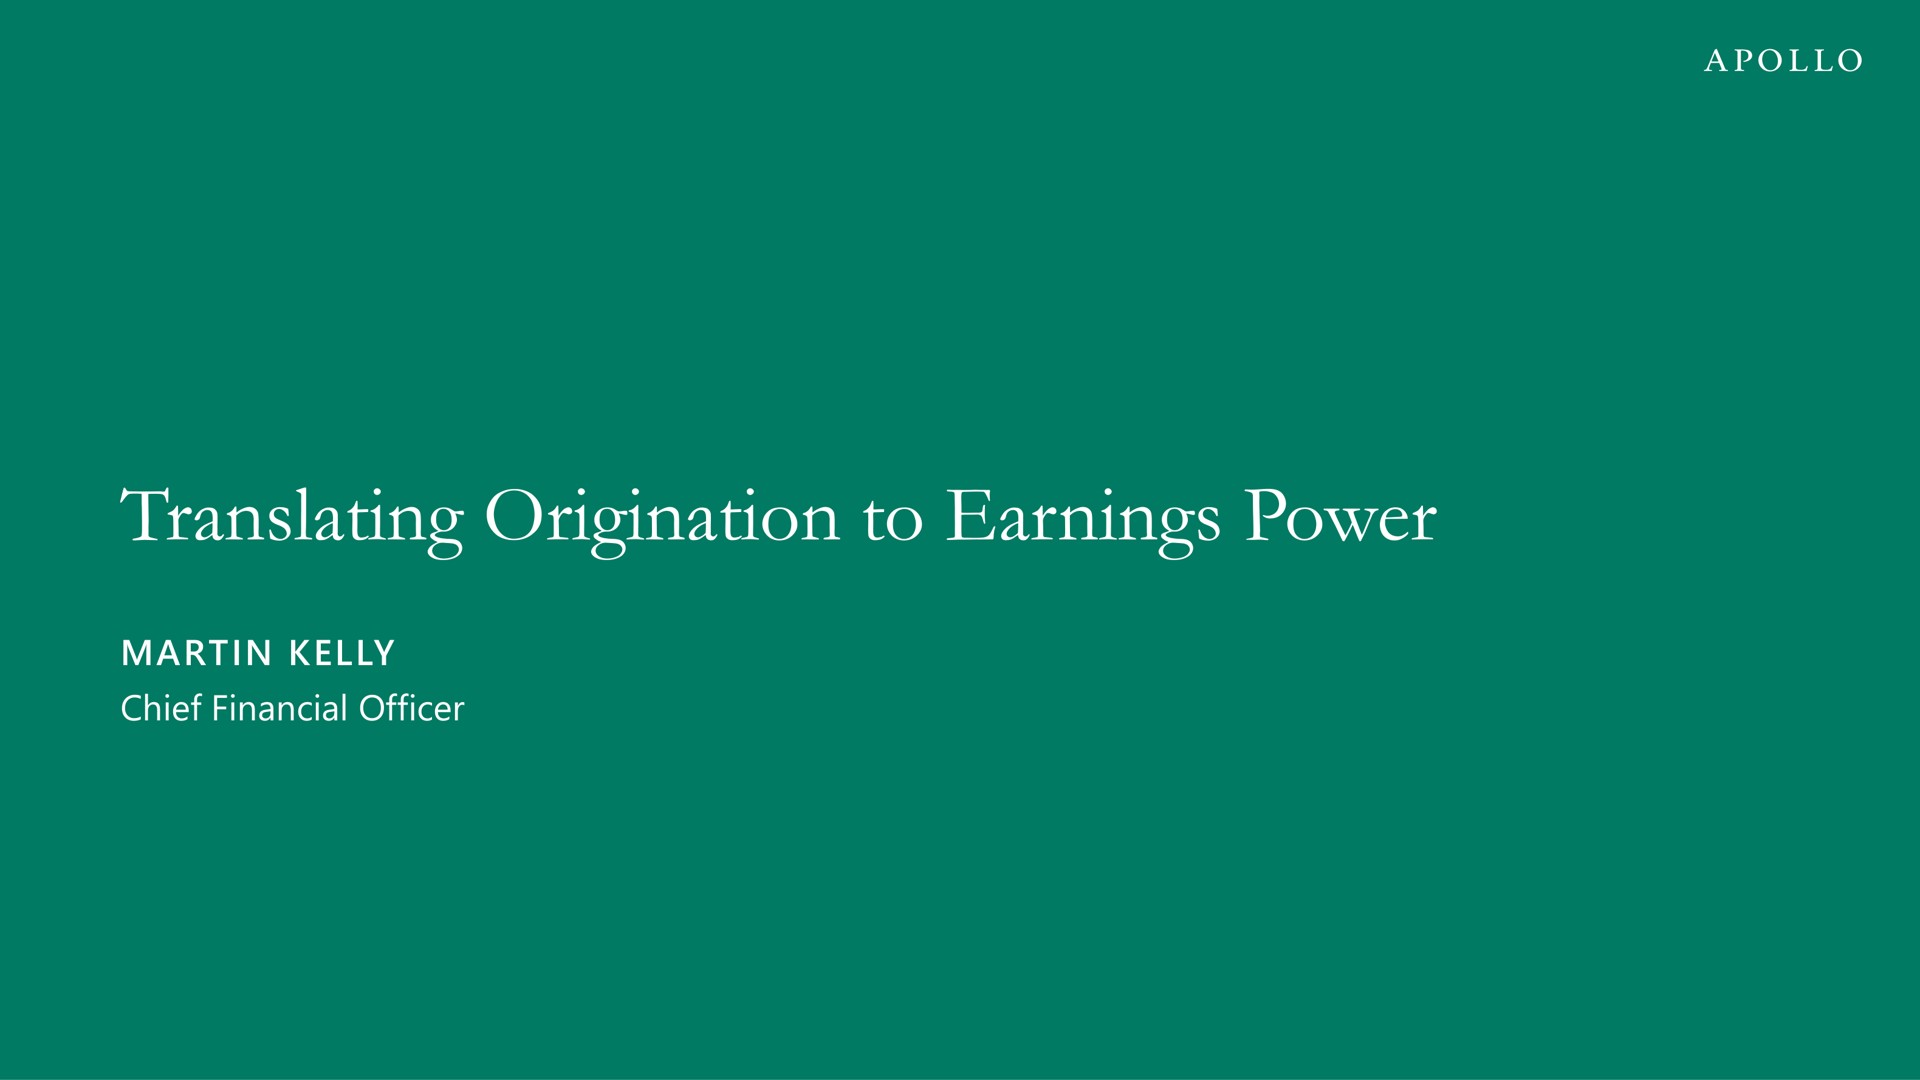 translating origination to earnings power | Apollo Global Management